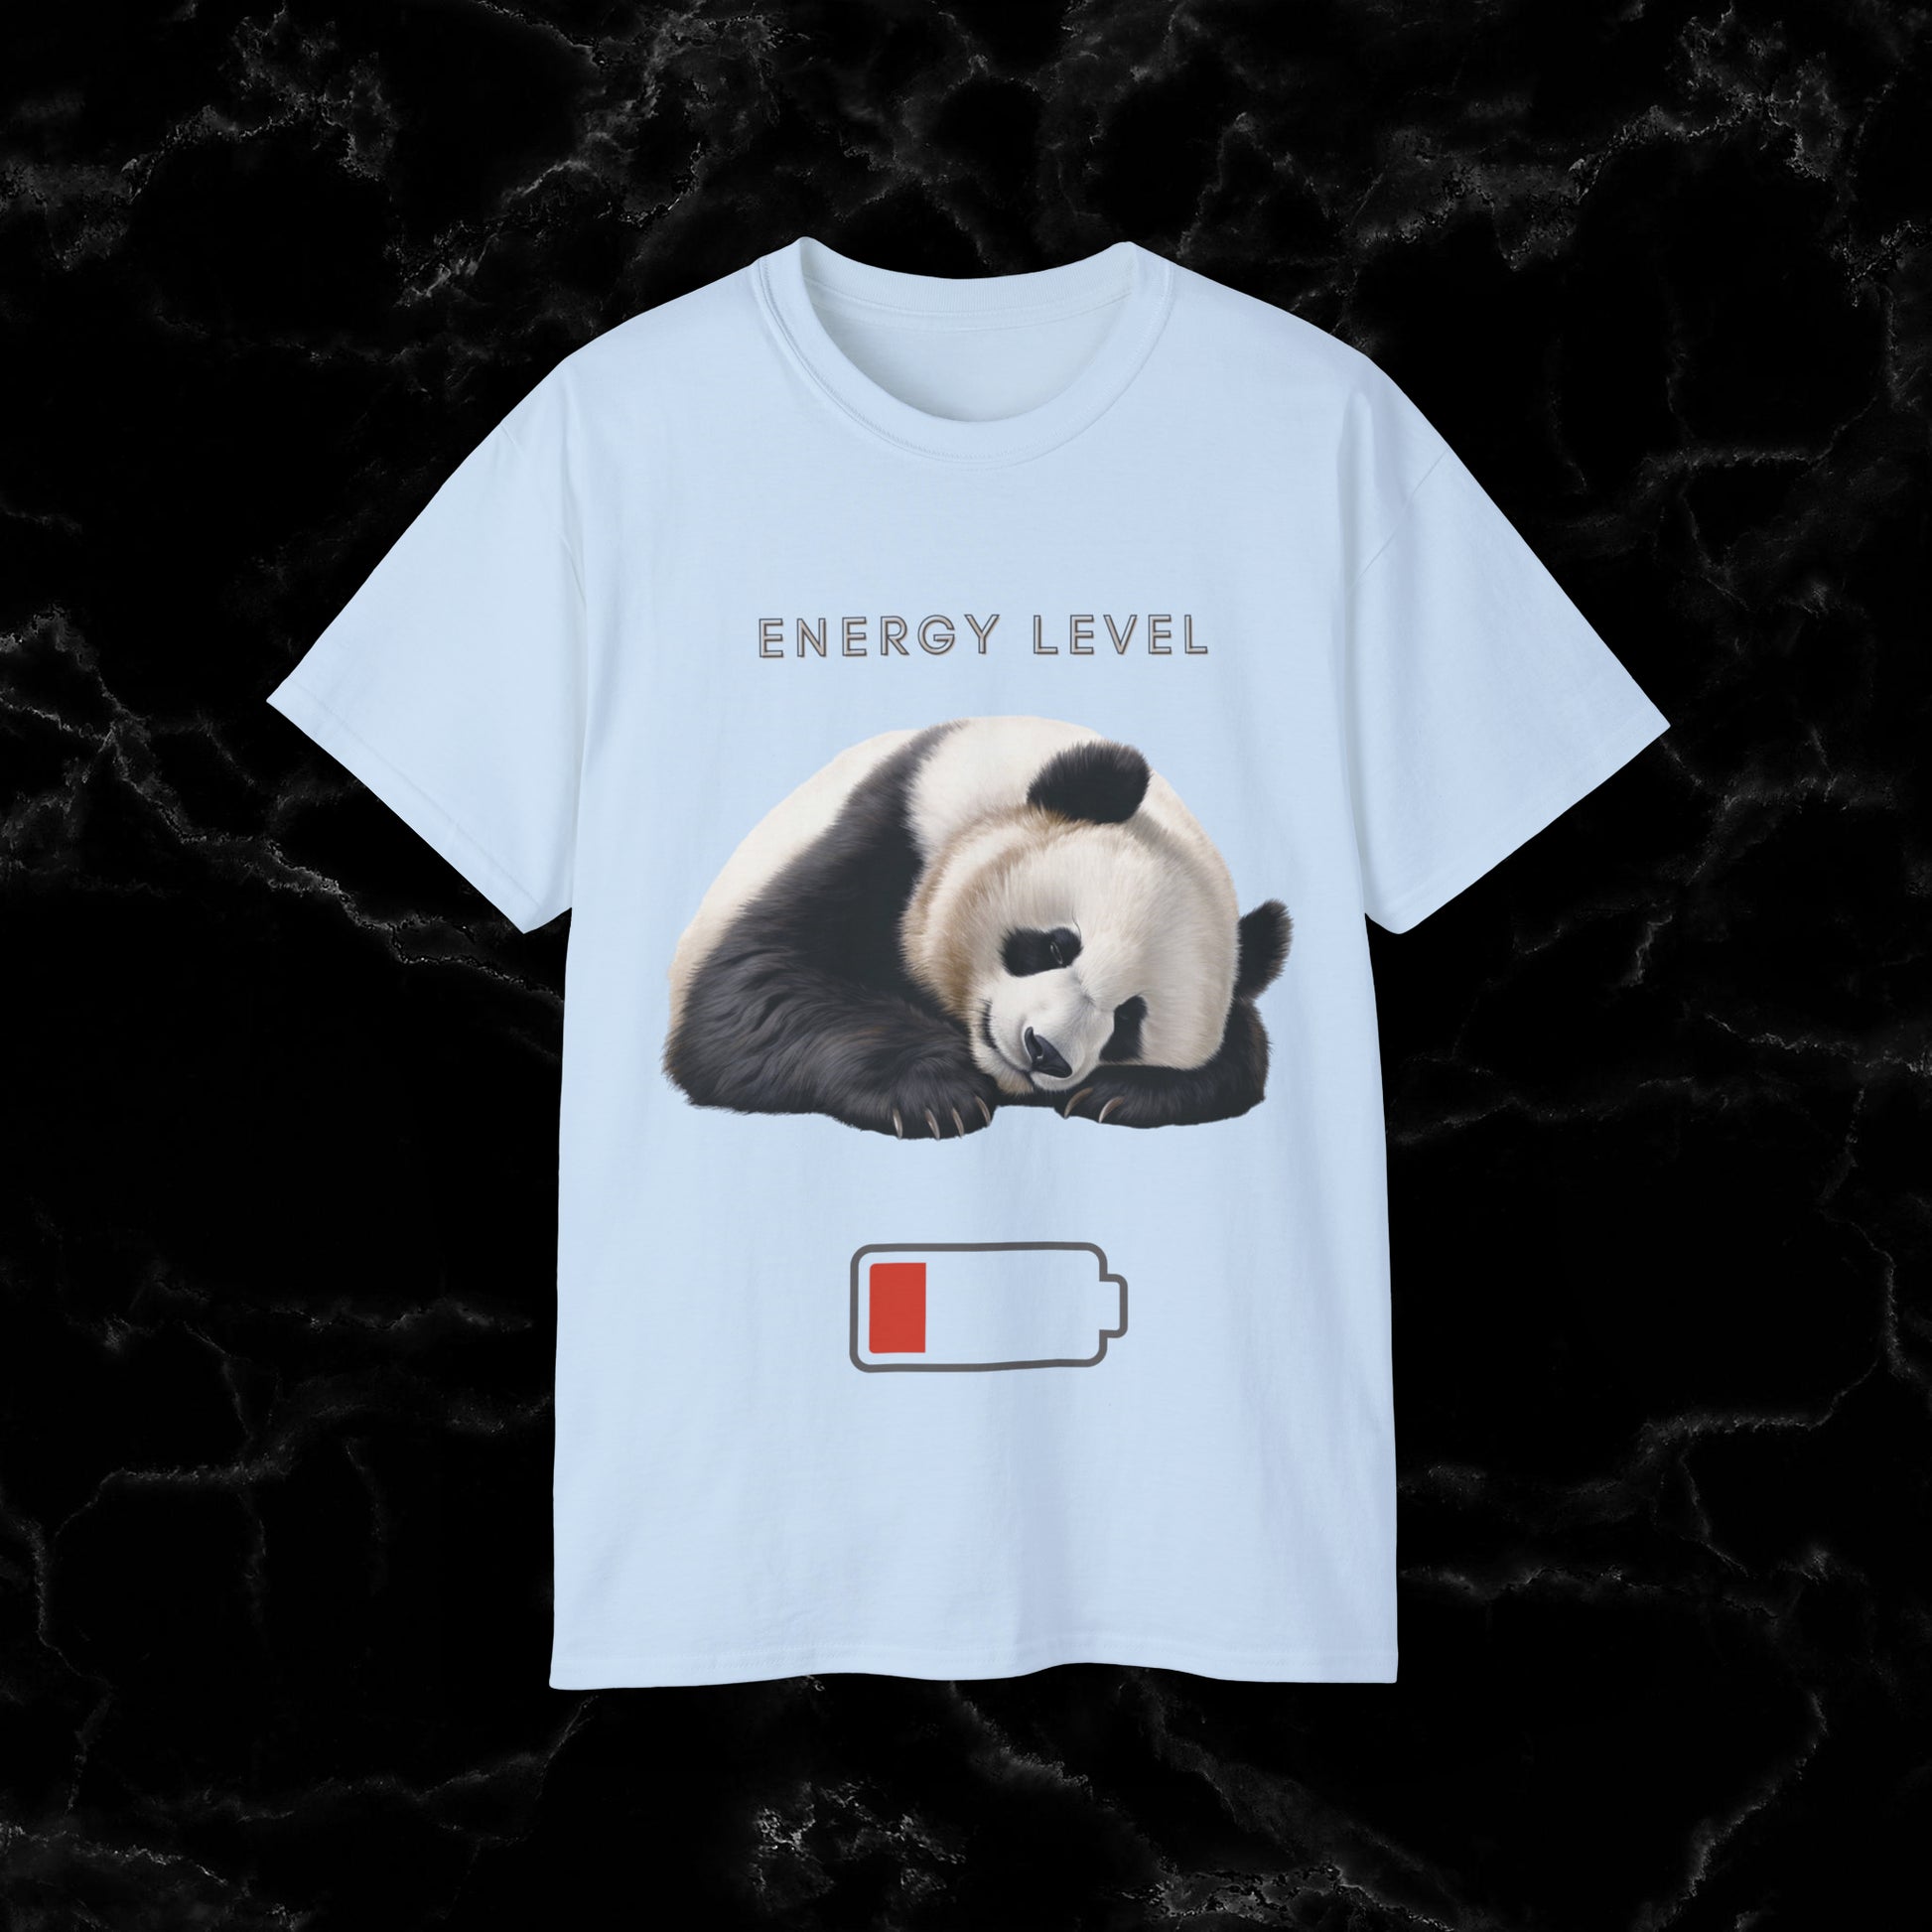 Nap Time Panda Unisex Funny Tee - Hilarious Panda Nap Design - Energy Level T-Shirt Light Blue S 